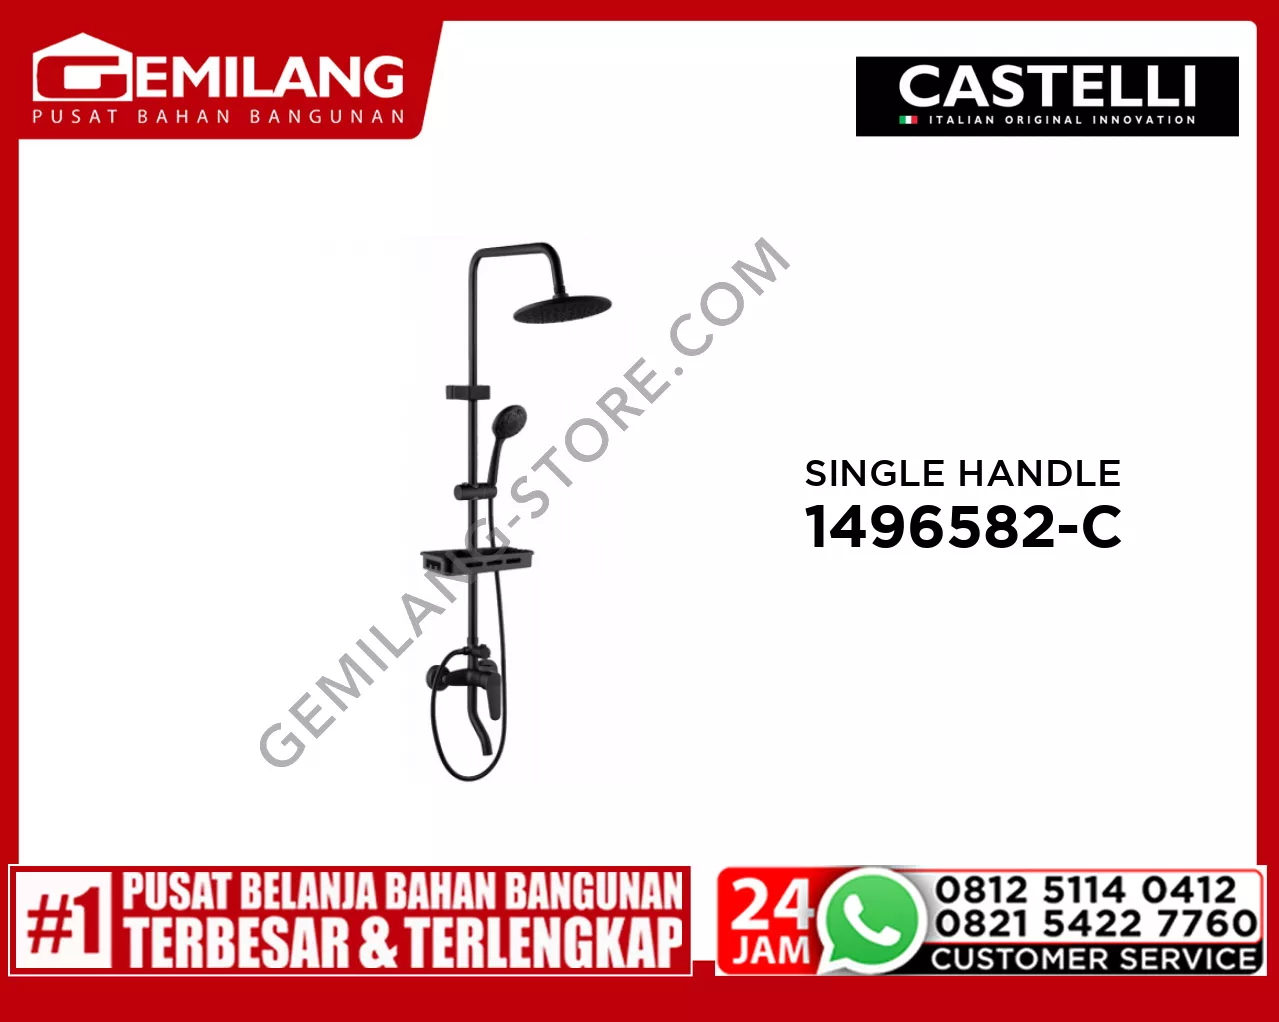 CASTELLI SINGLE HANDLE RAINSHOWER MIXER SET 1496582-CR